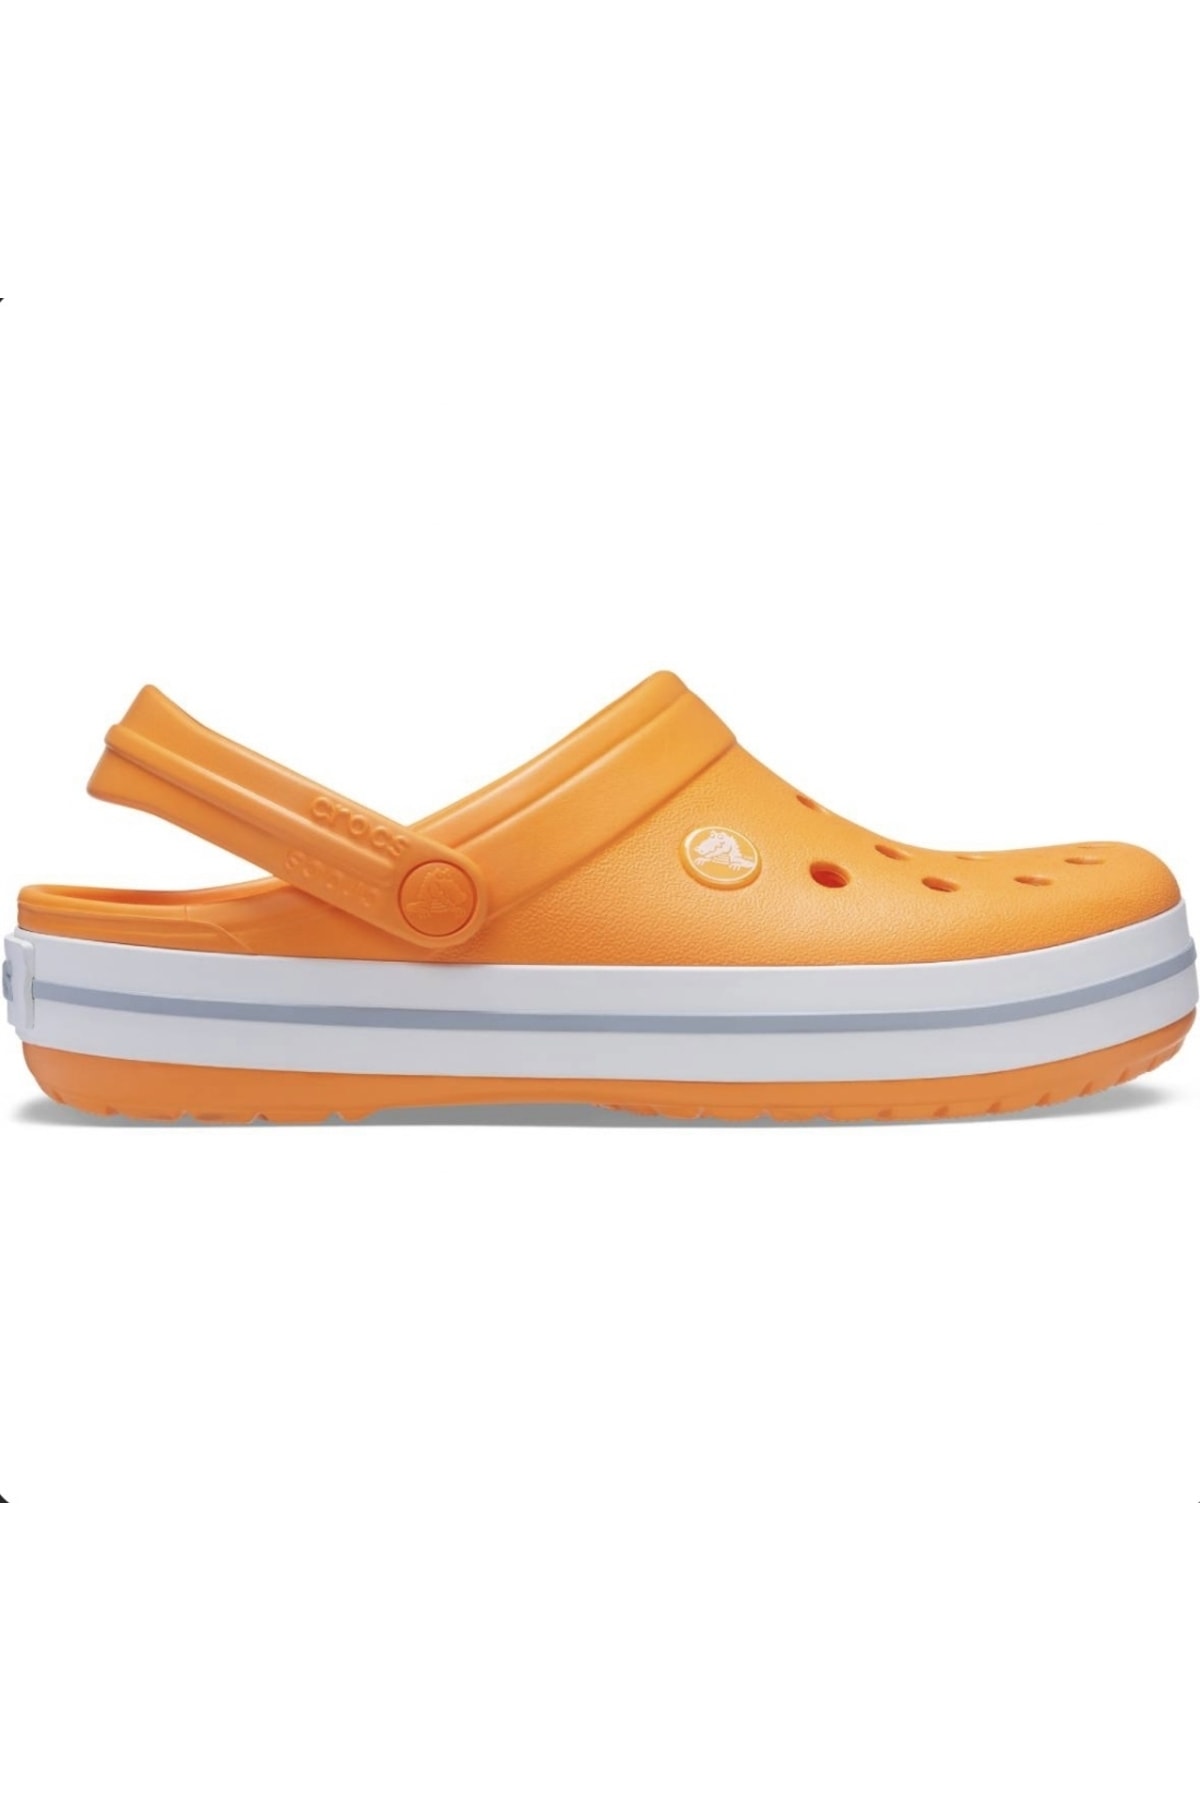 Crocs Crocband 11016-83a– Orange Zing